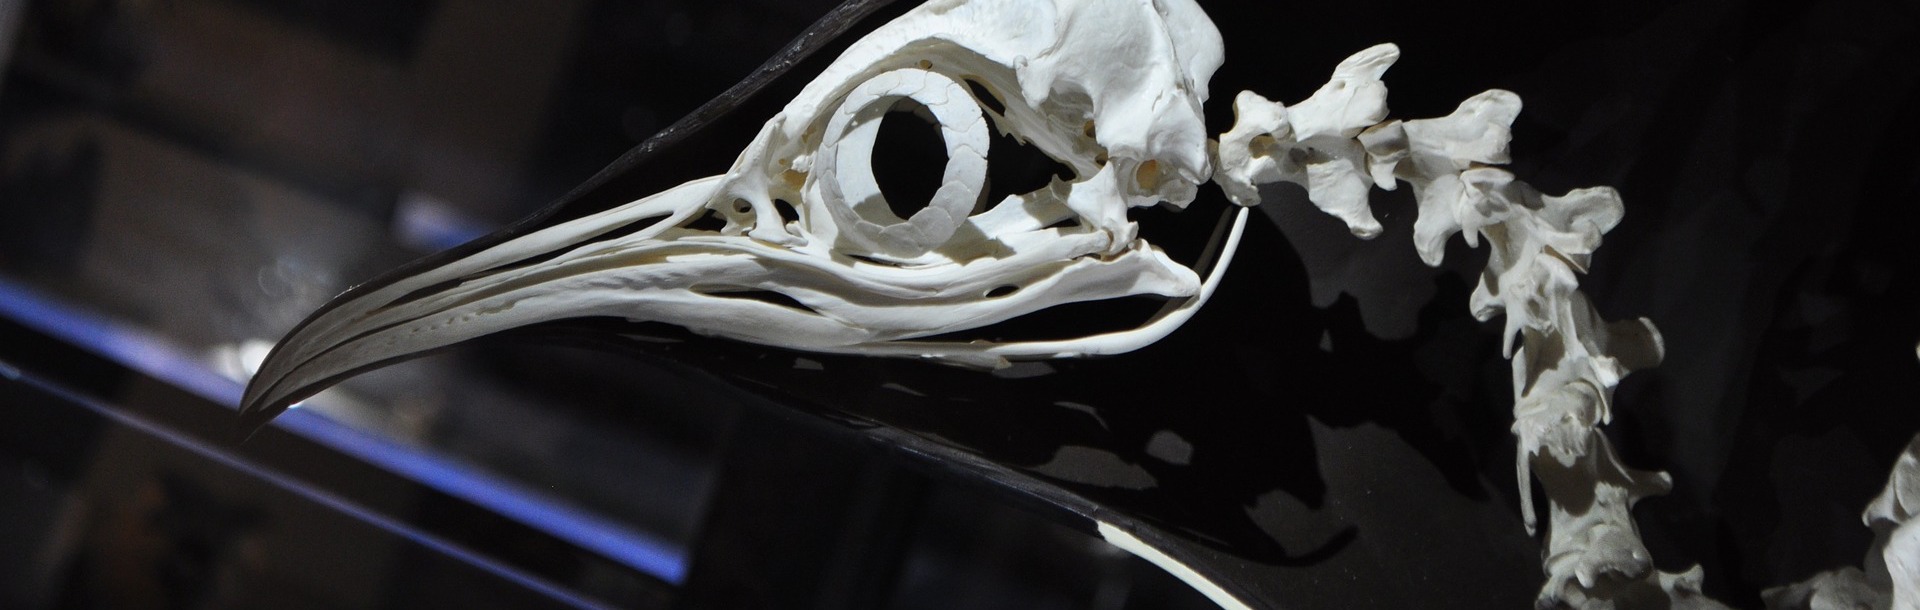 A penguin's skeleton on display in a museum. Credit: marcelabr/pixabay